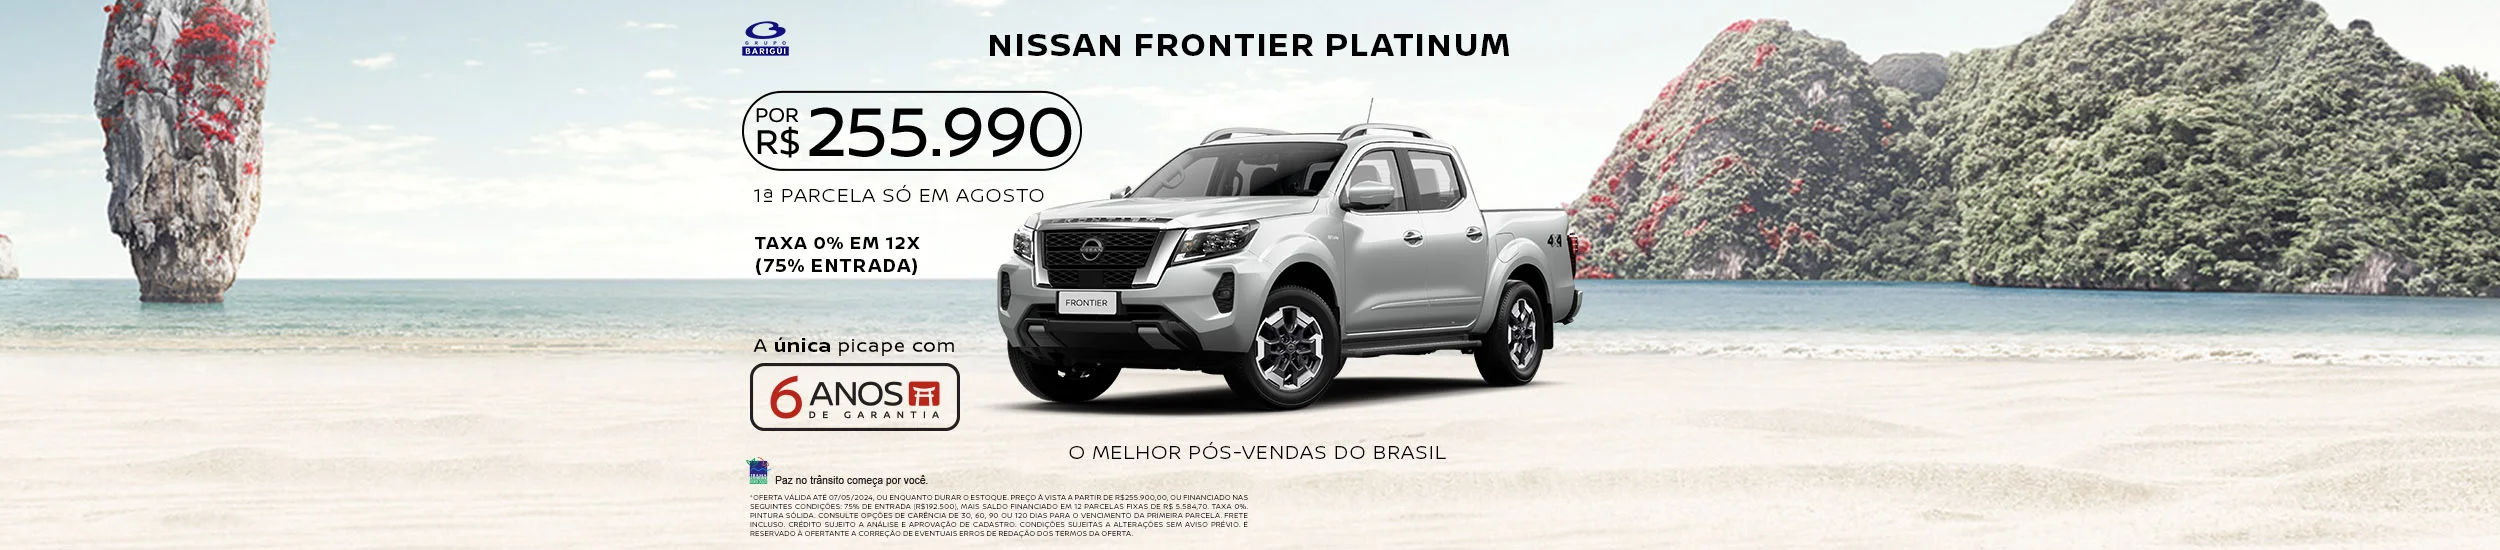 Nissan Frontier Platinum